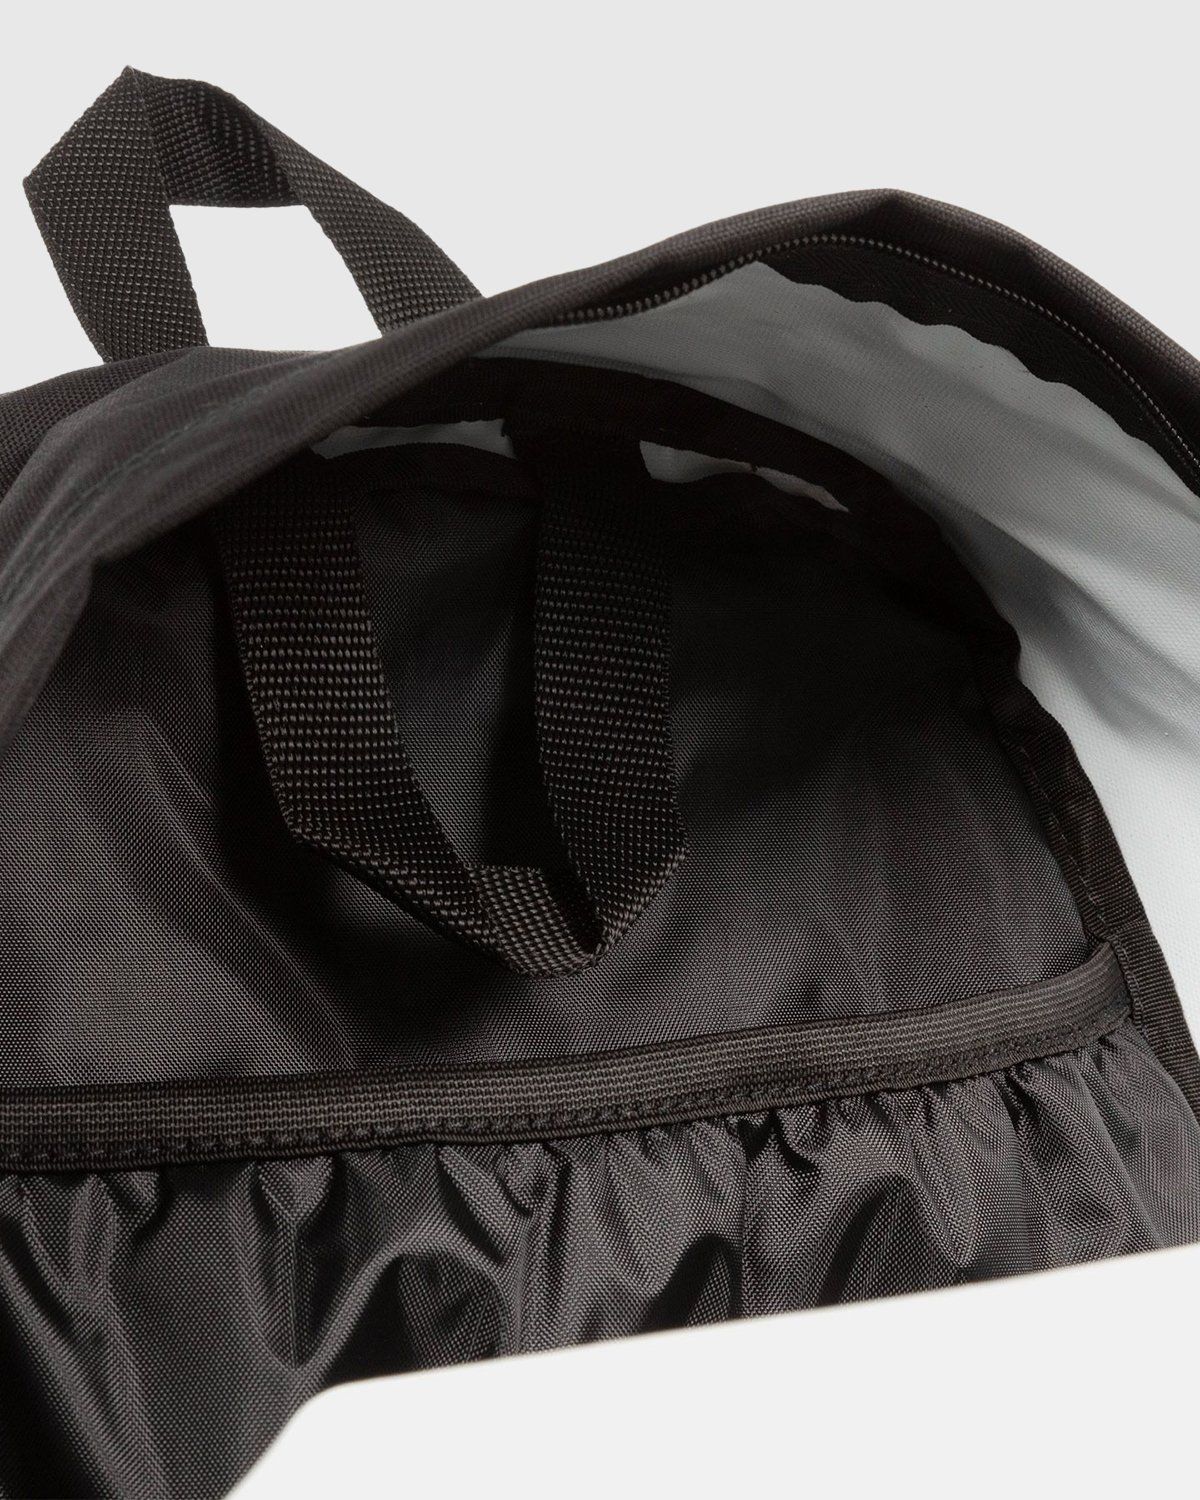 MM6 Maison Margiela x Eastpak – Padded Backpack Black - Bags - Black - Image 8